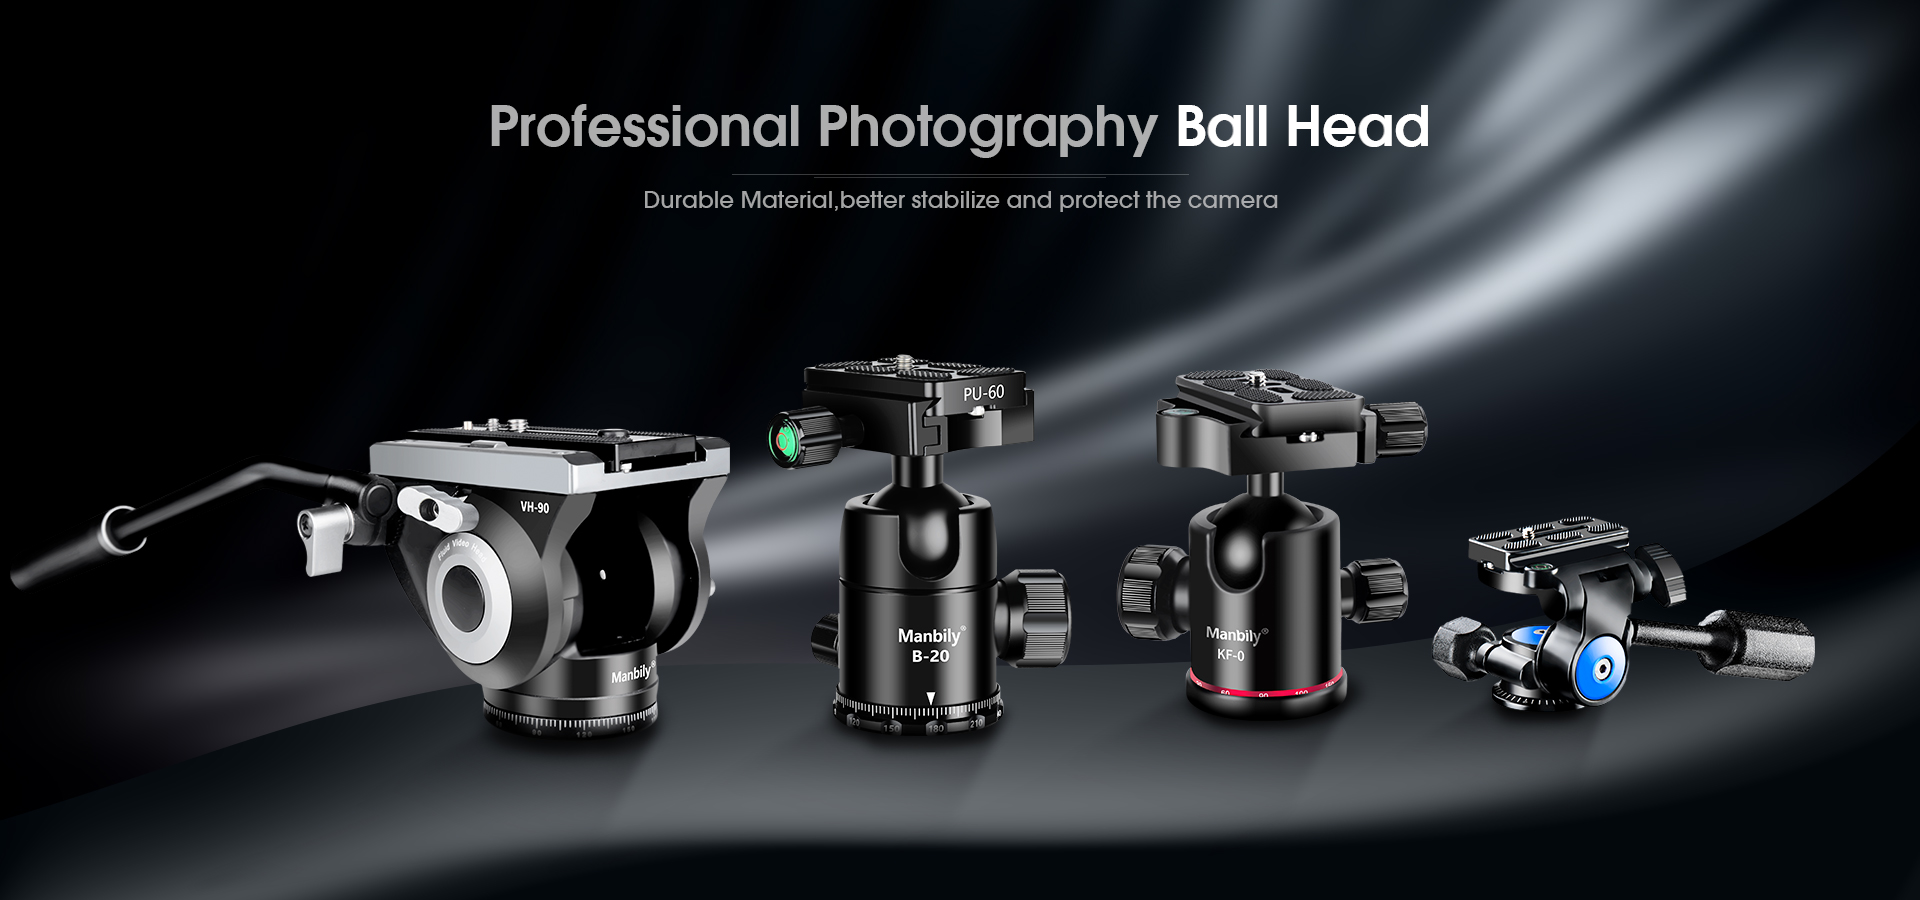 Manbily Professional Photography Camera Tripod Ball Head,Tripod Head